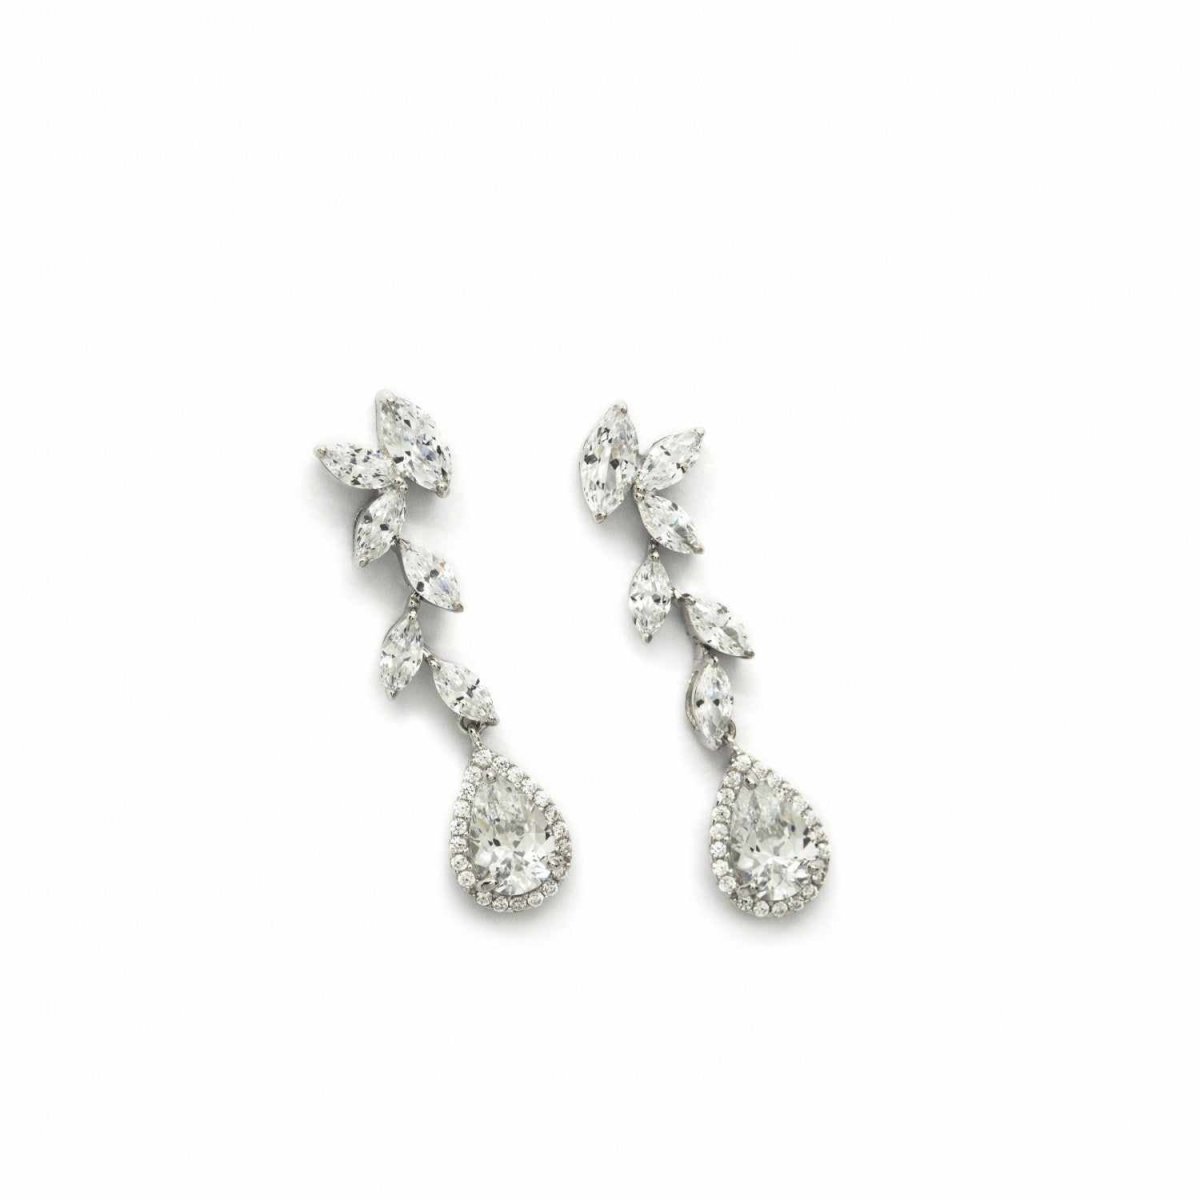 Earrings - Long earrings bride petals and teardrop final design